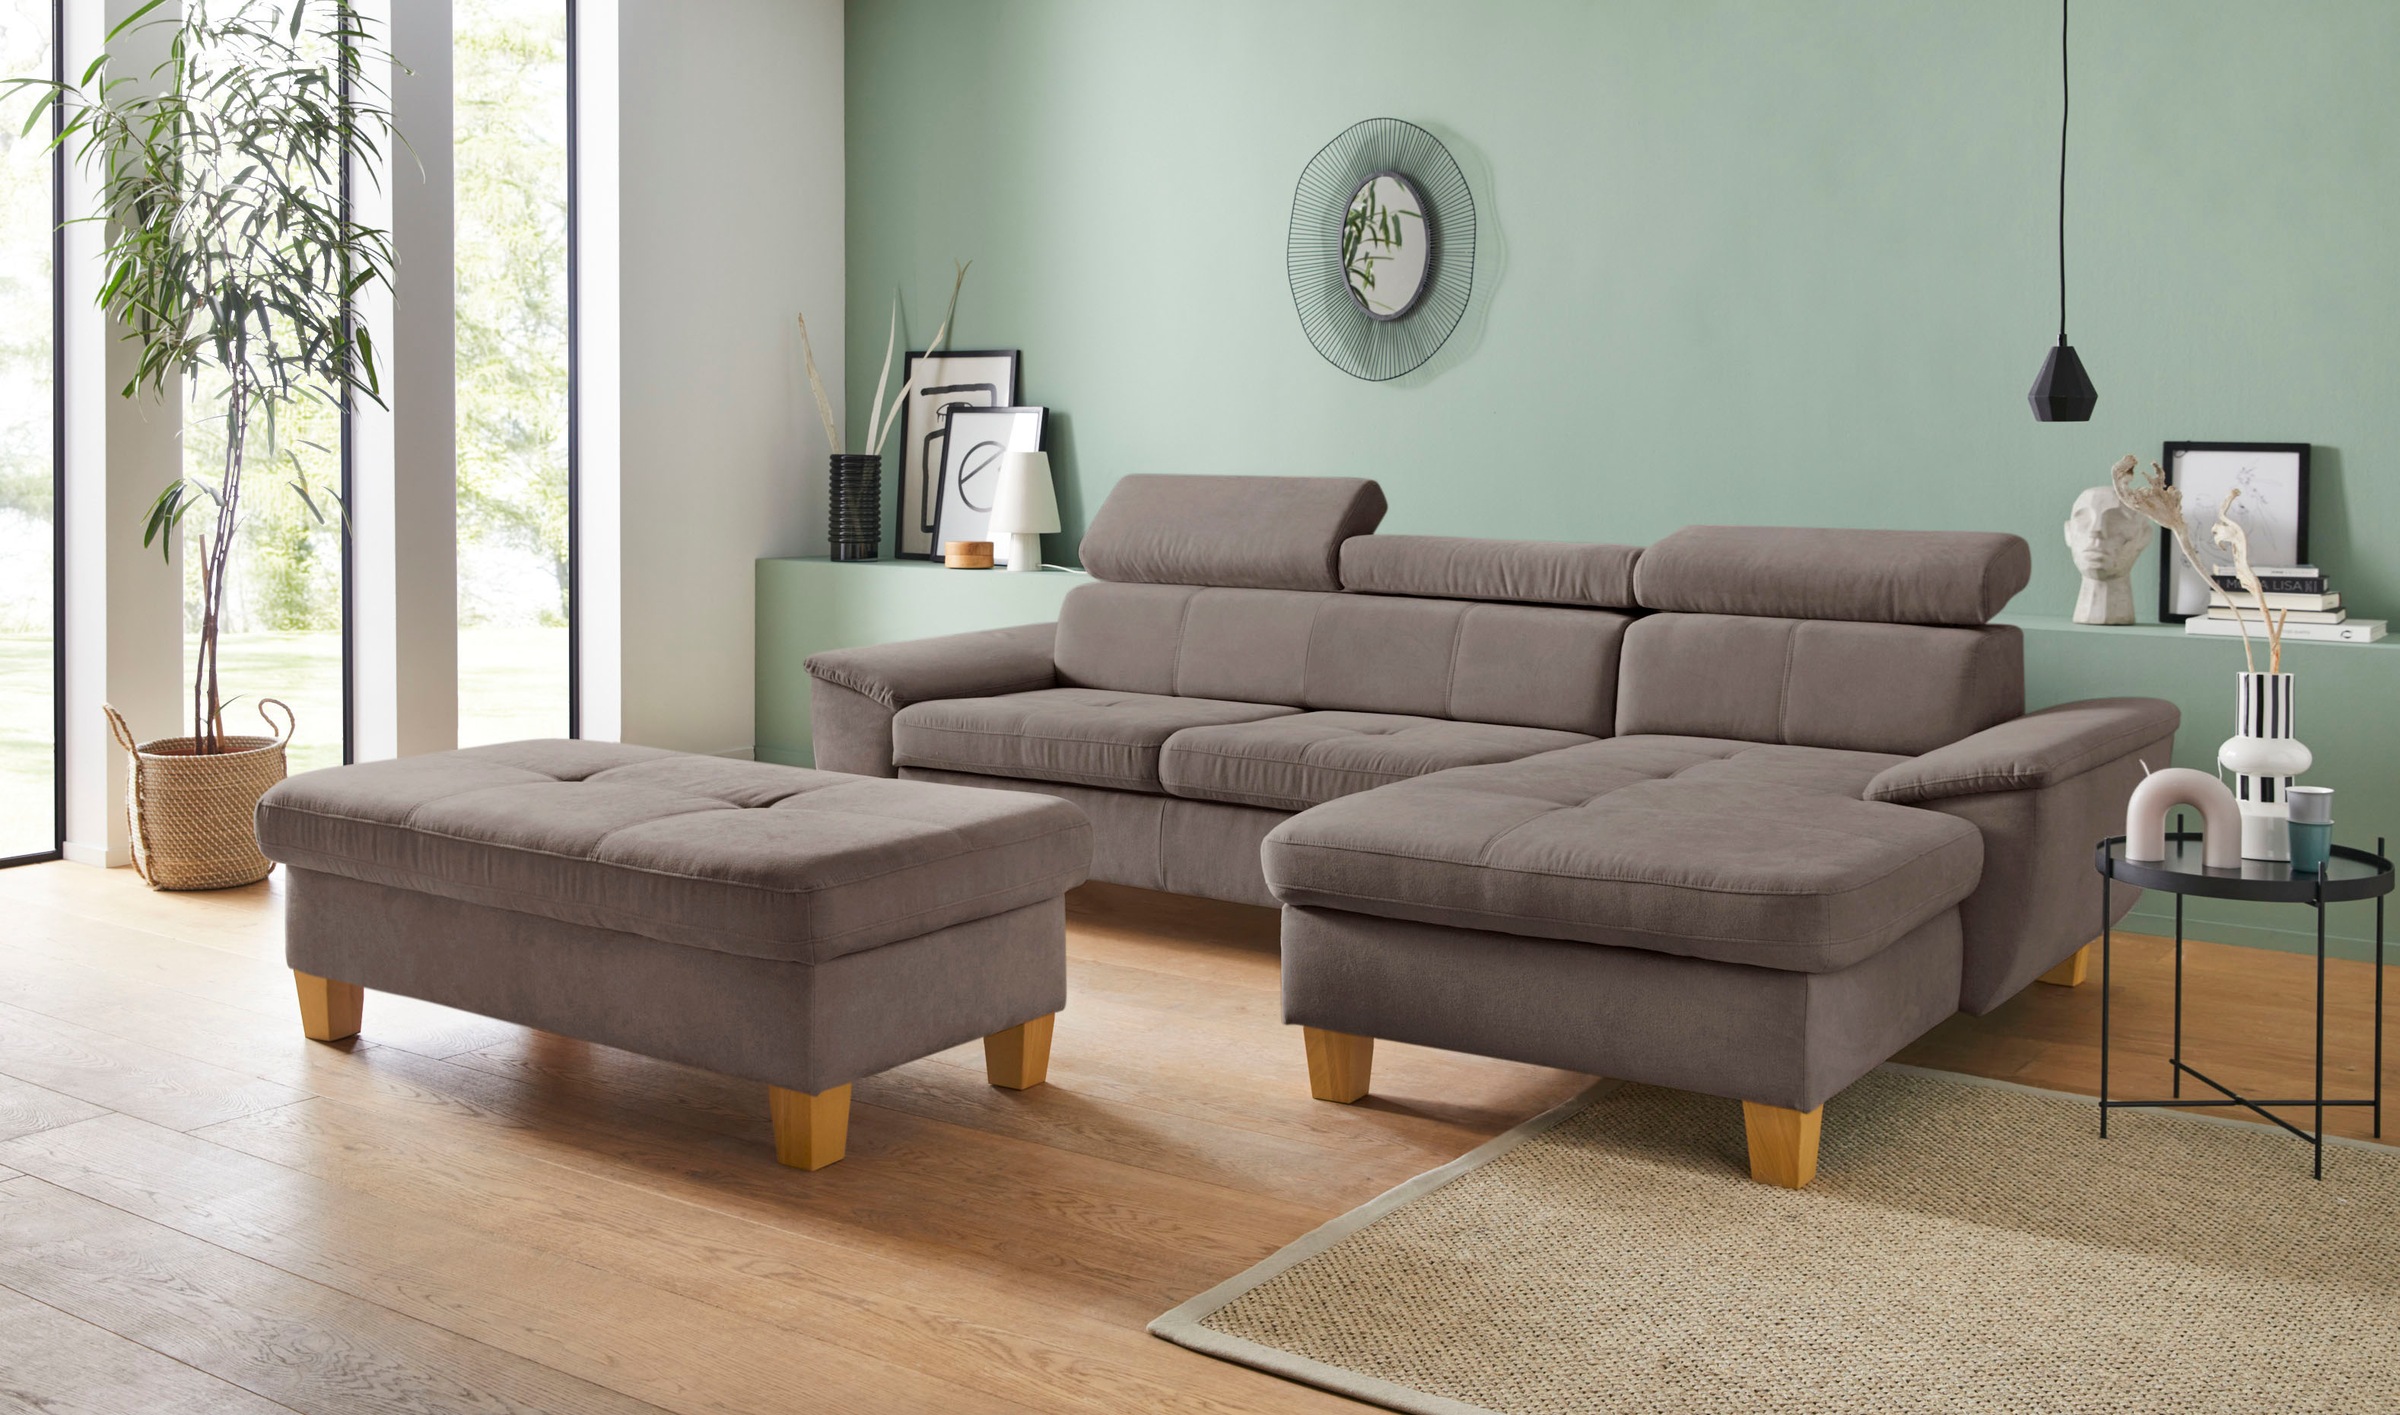 Hocker fashion sofa »Enya« exxpo kaufen - online